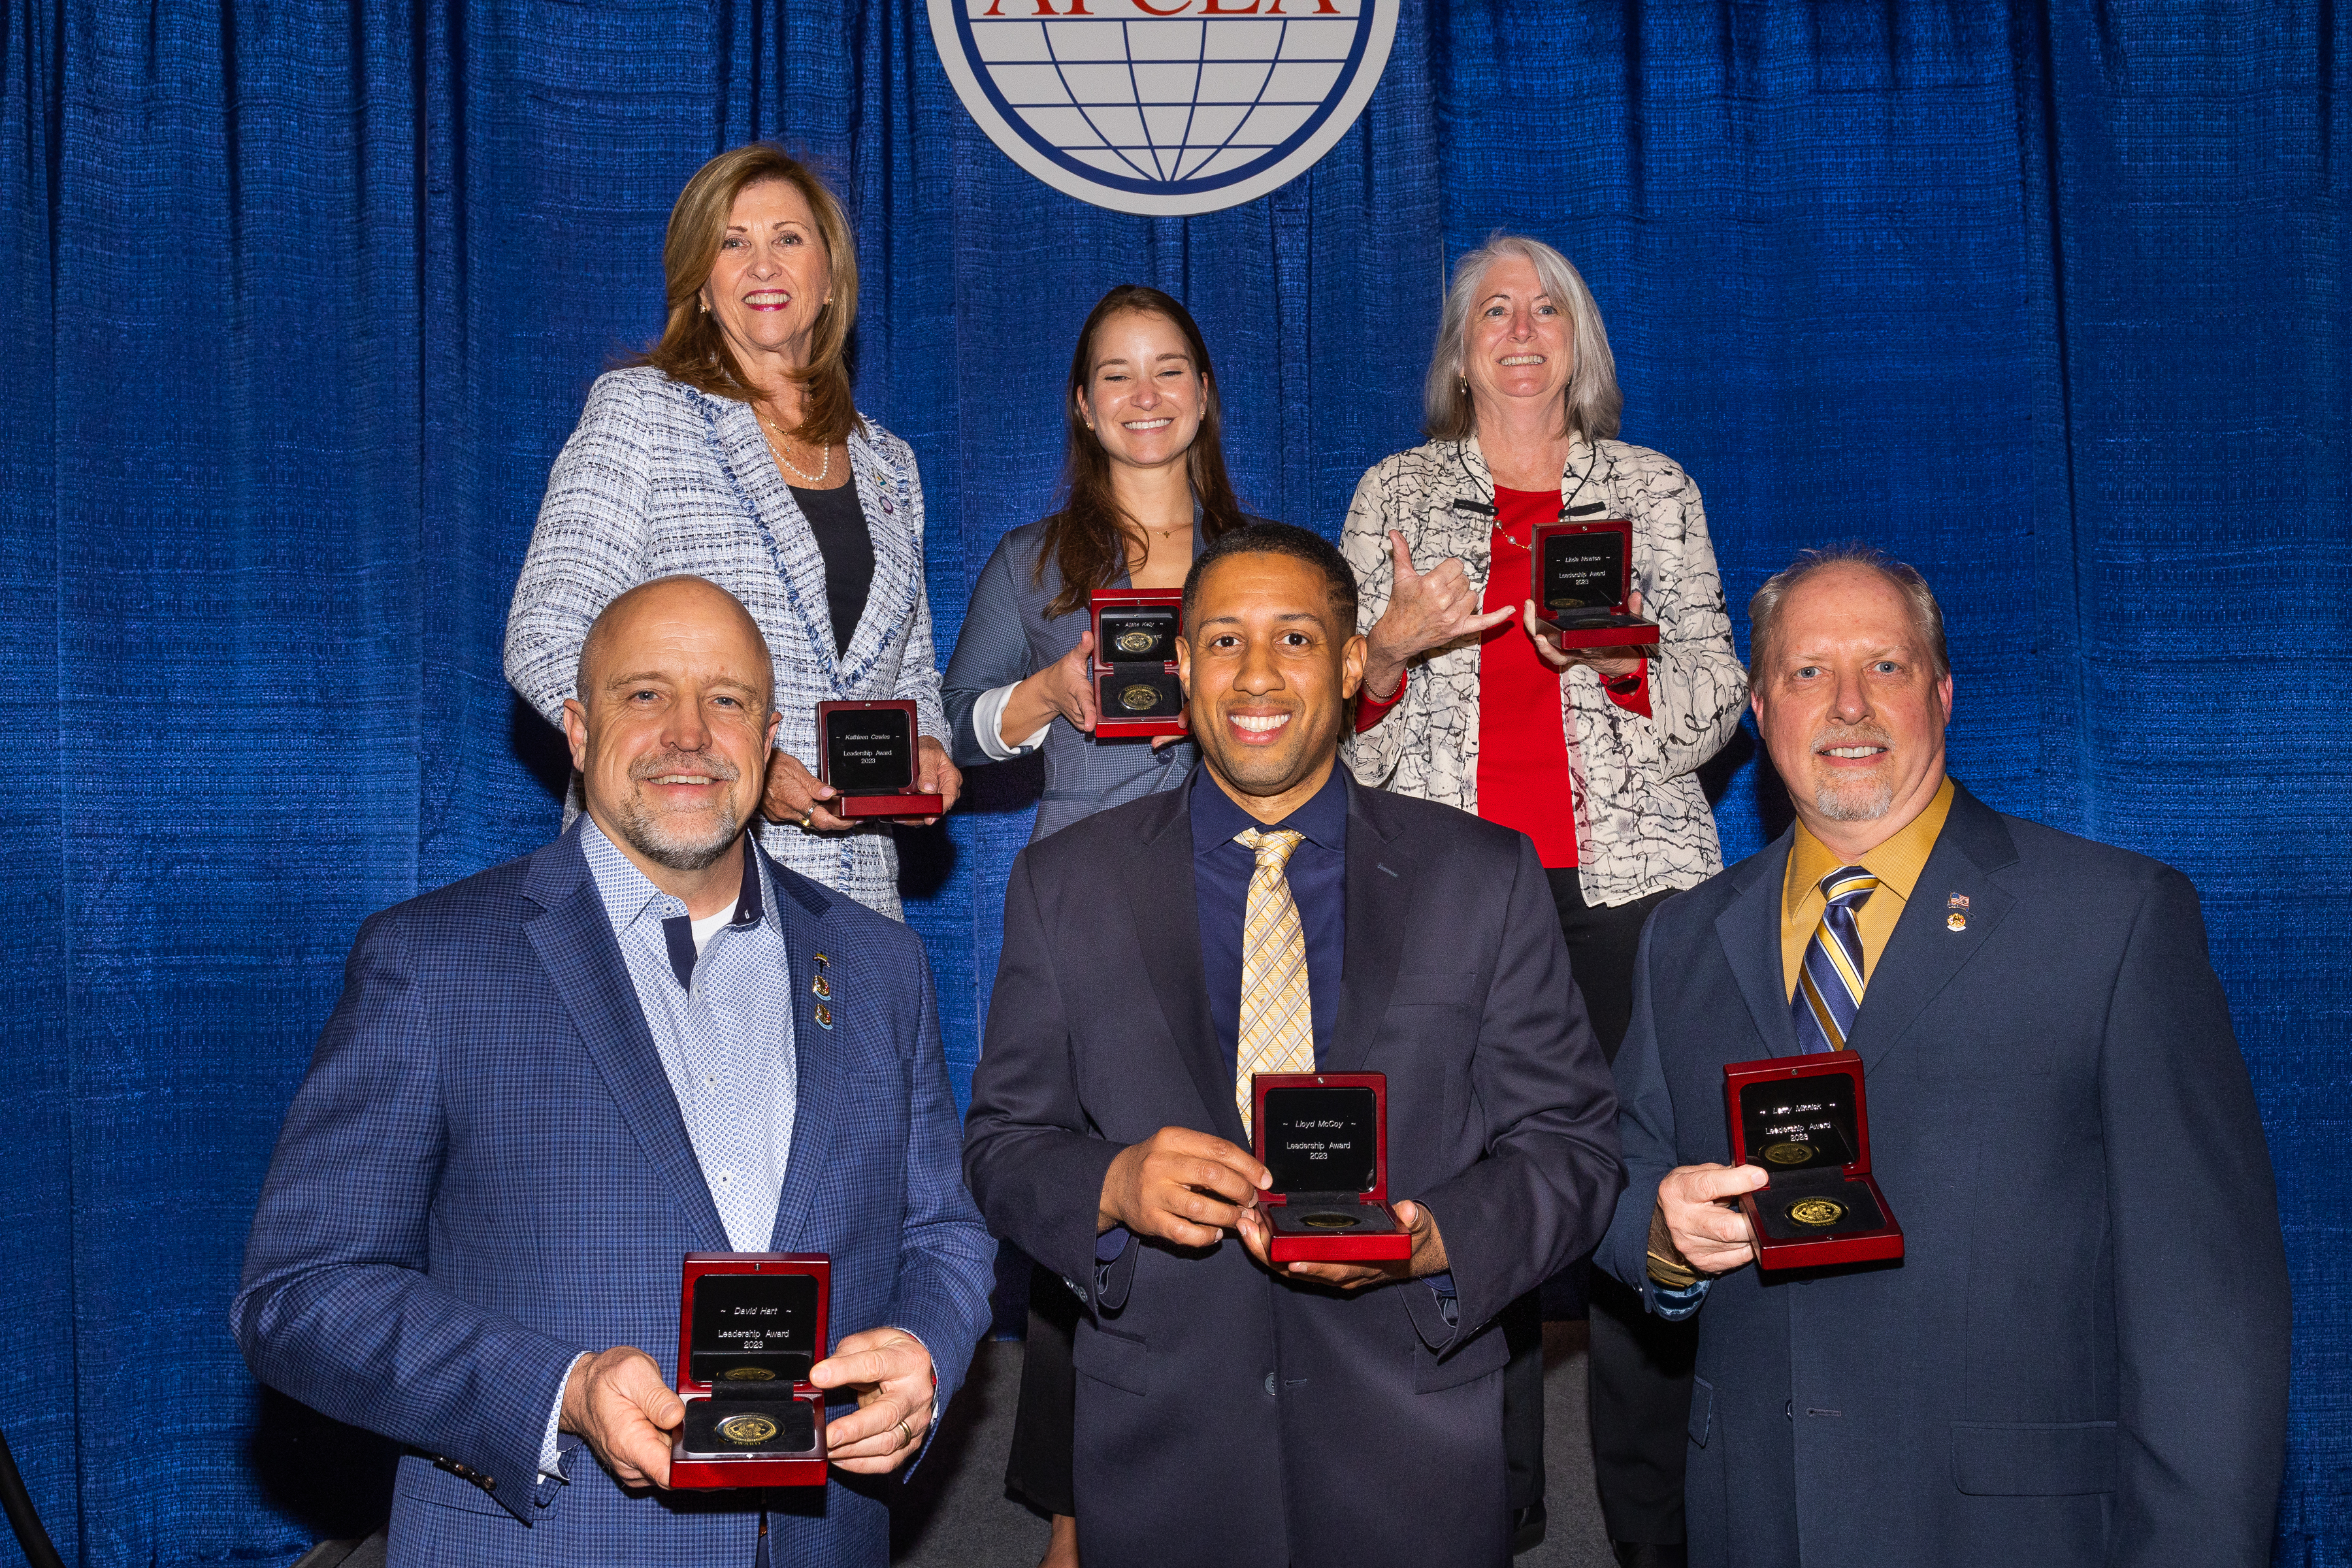 WCM Announces 2023 Leadership Award Winners